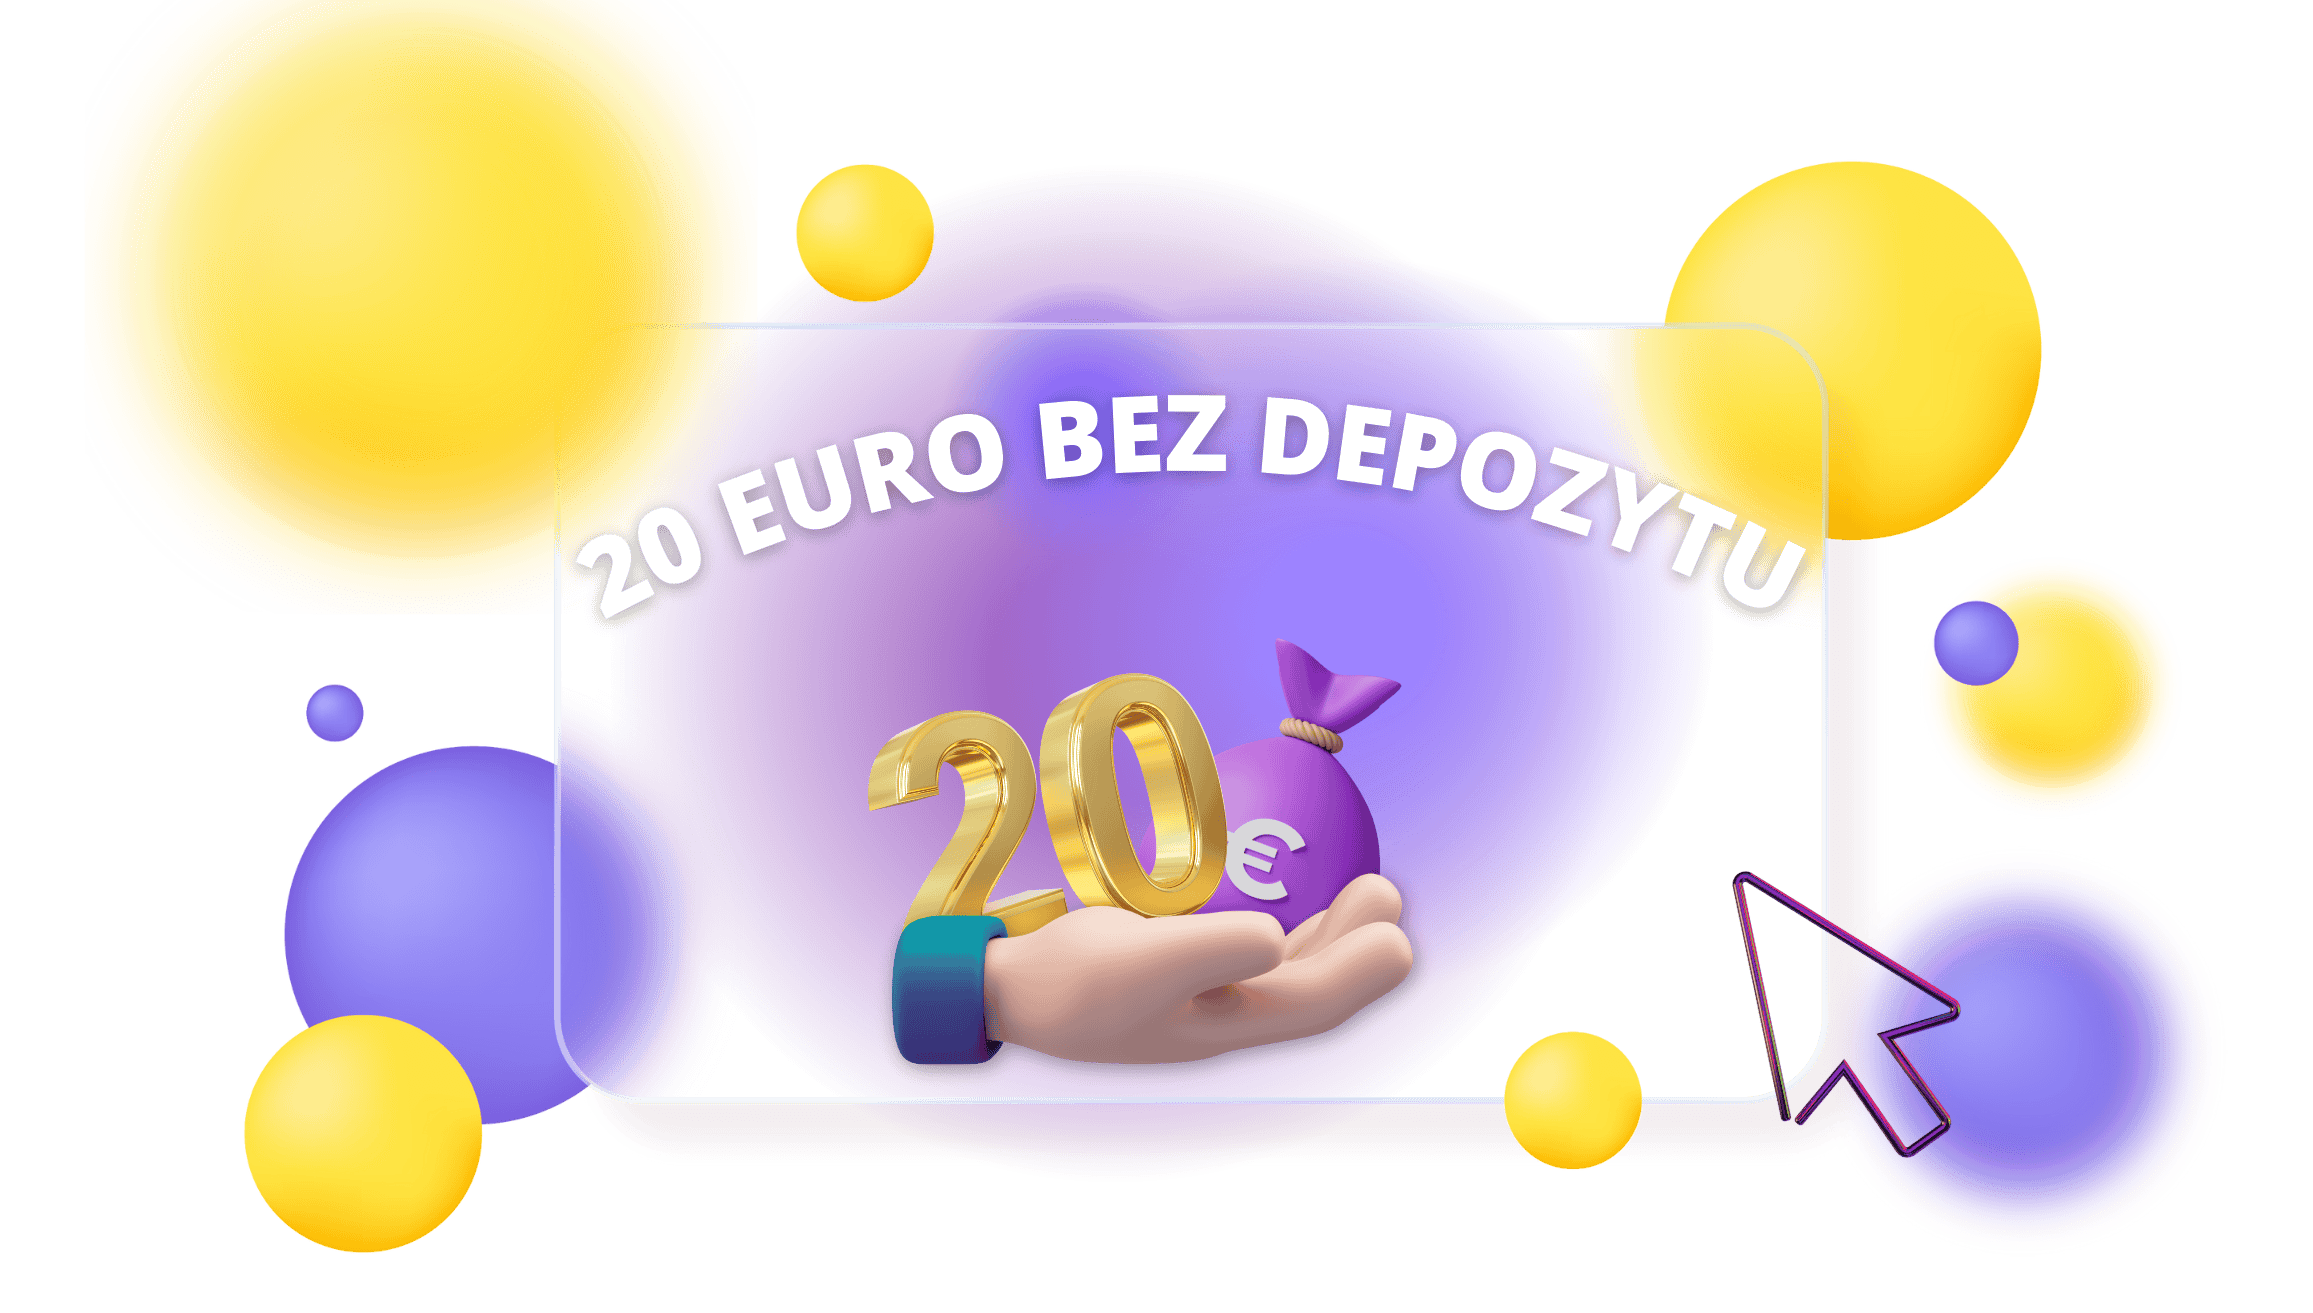 20 Euro no deposit bonus casino Nowekasyna-pl.com